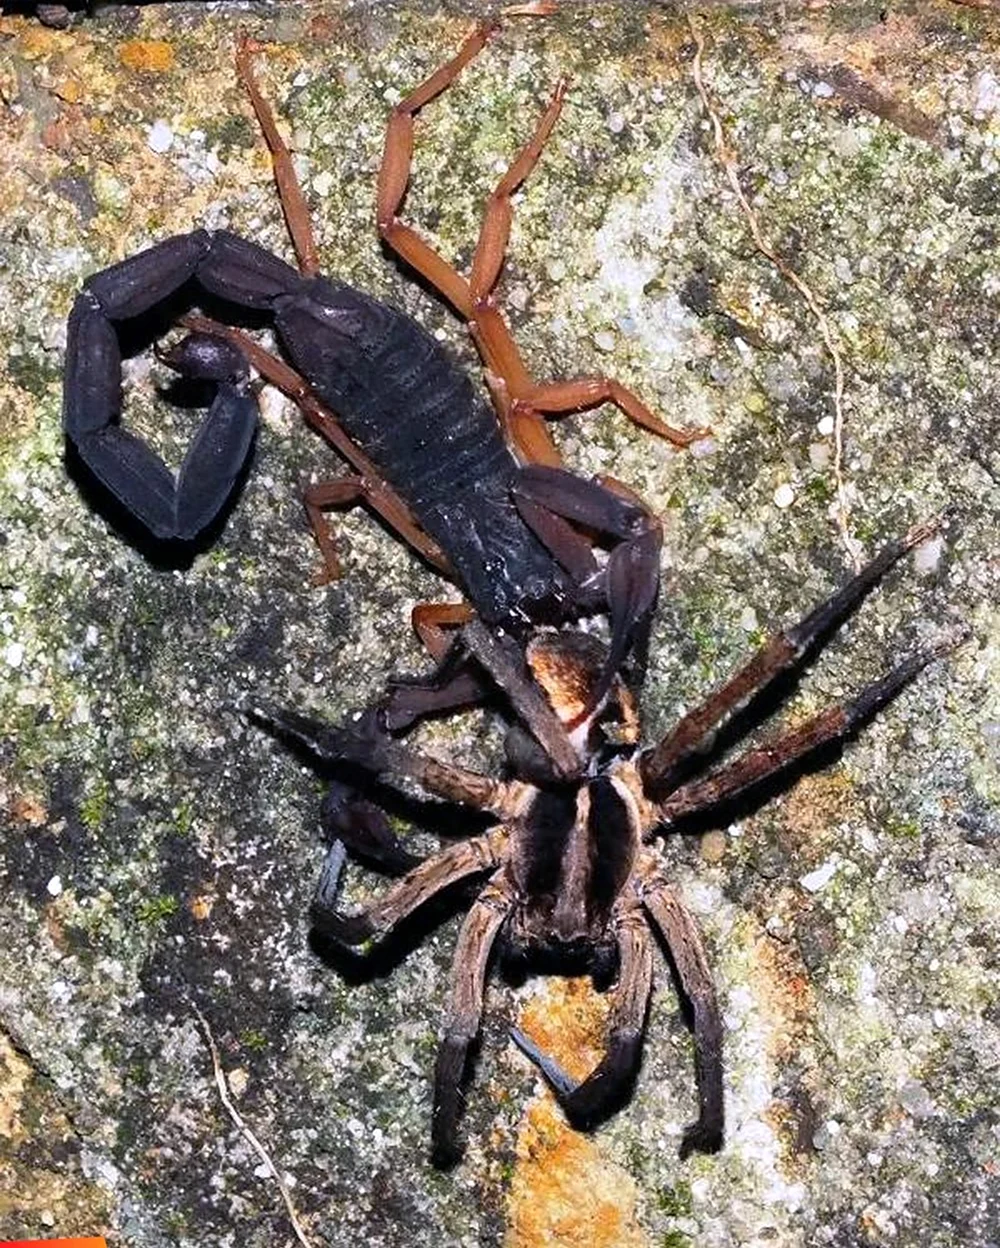 Scorpion vs Spider